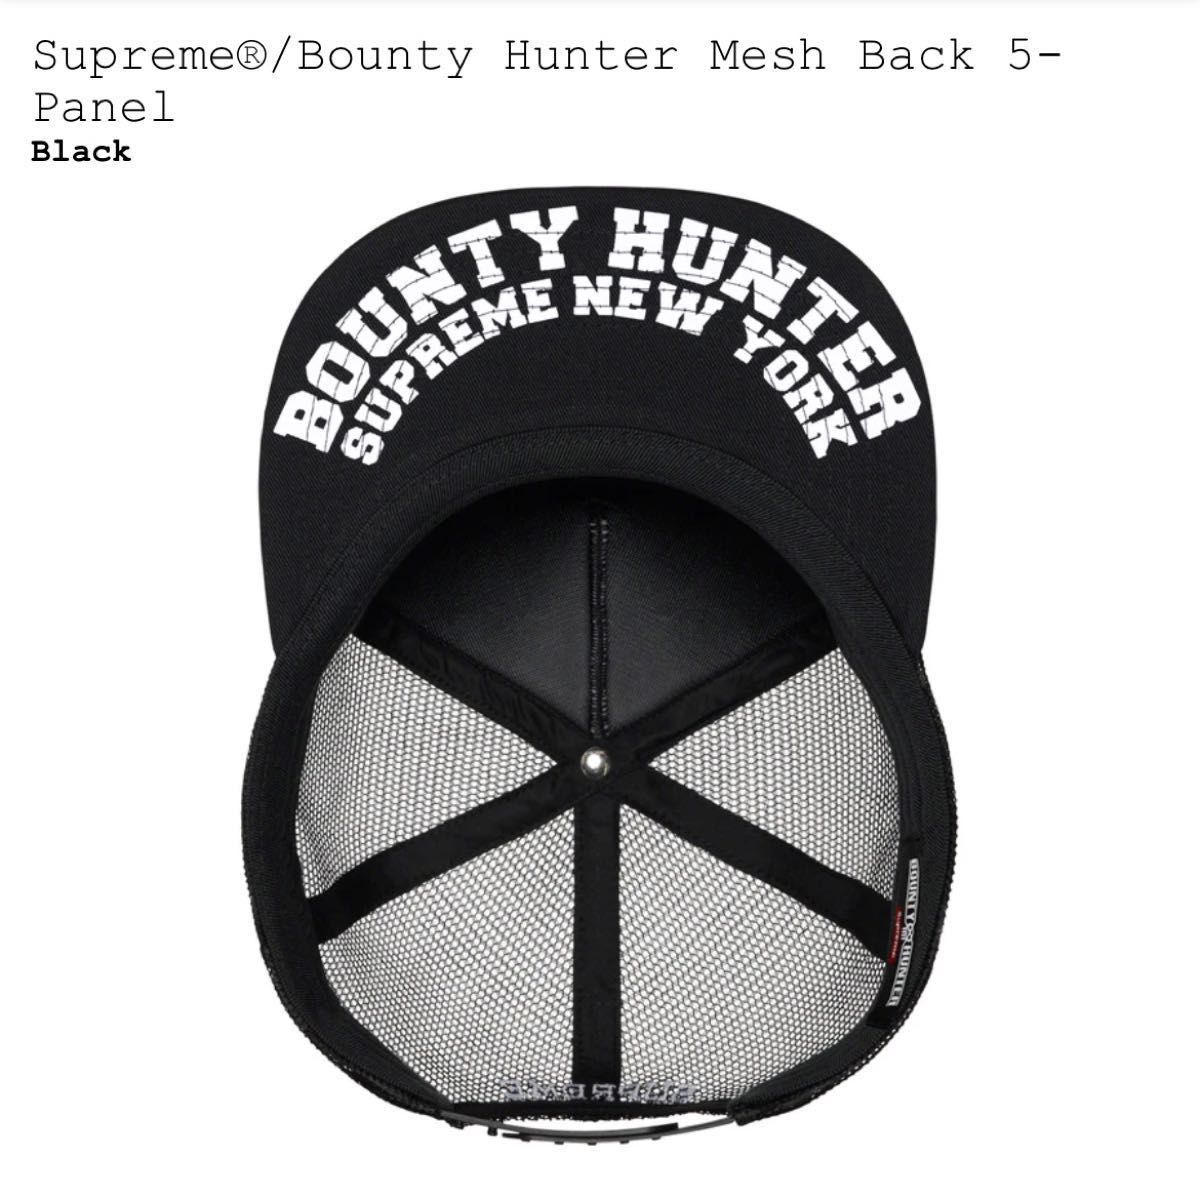 Supreme Bounty Hunter Mesh Back 5-Panel